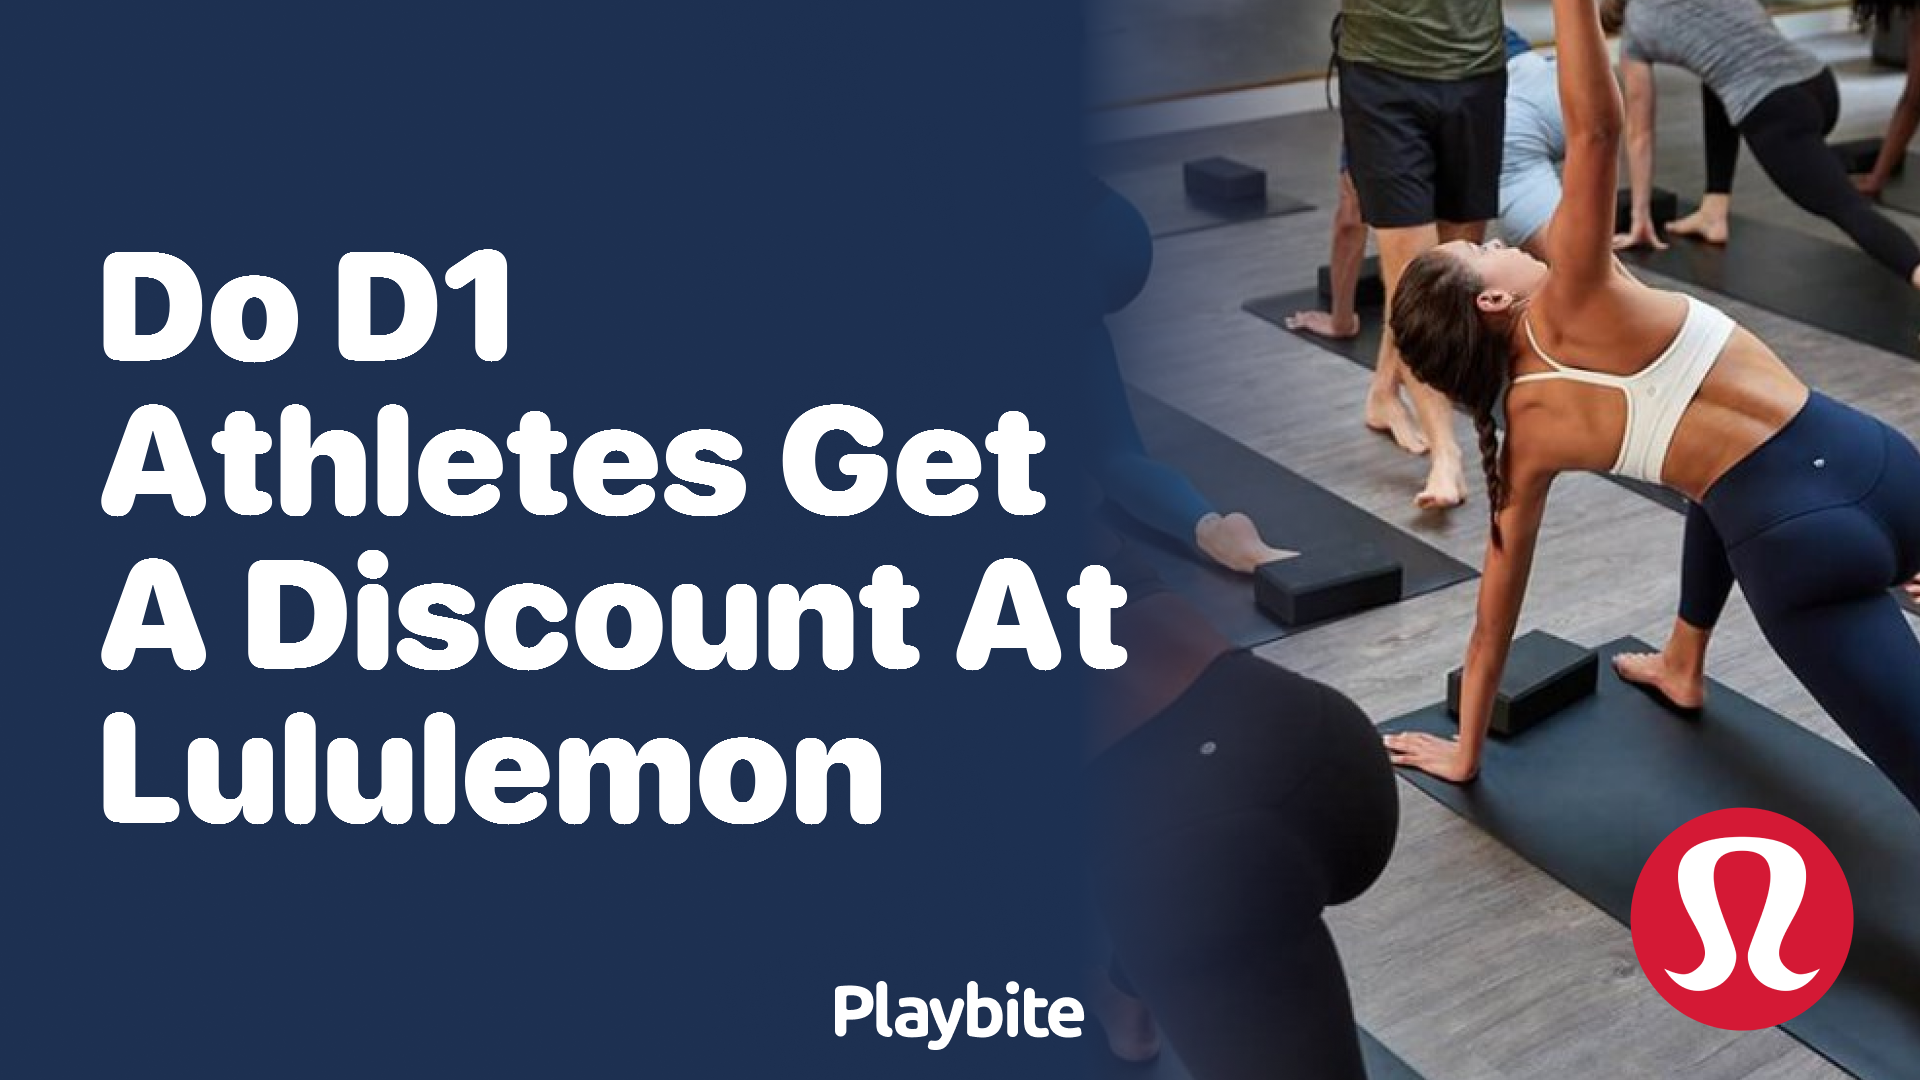 Do D1 Athletes Get a Discount at Lululemon? - Playbite